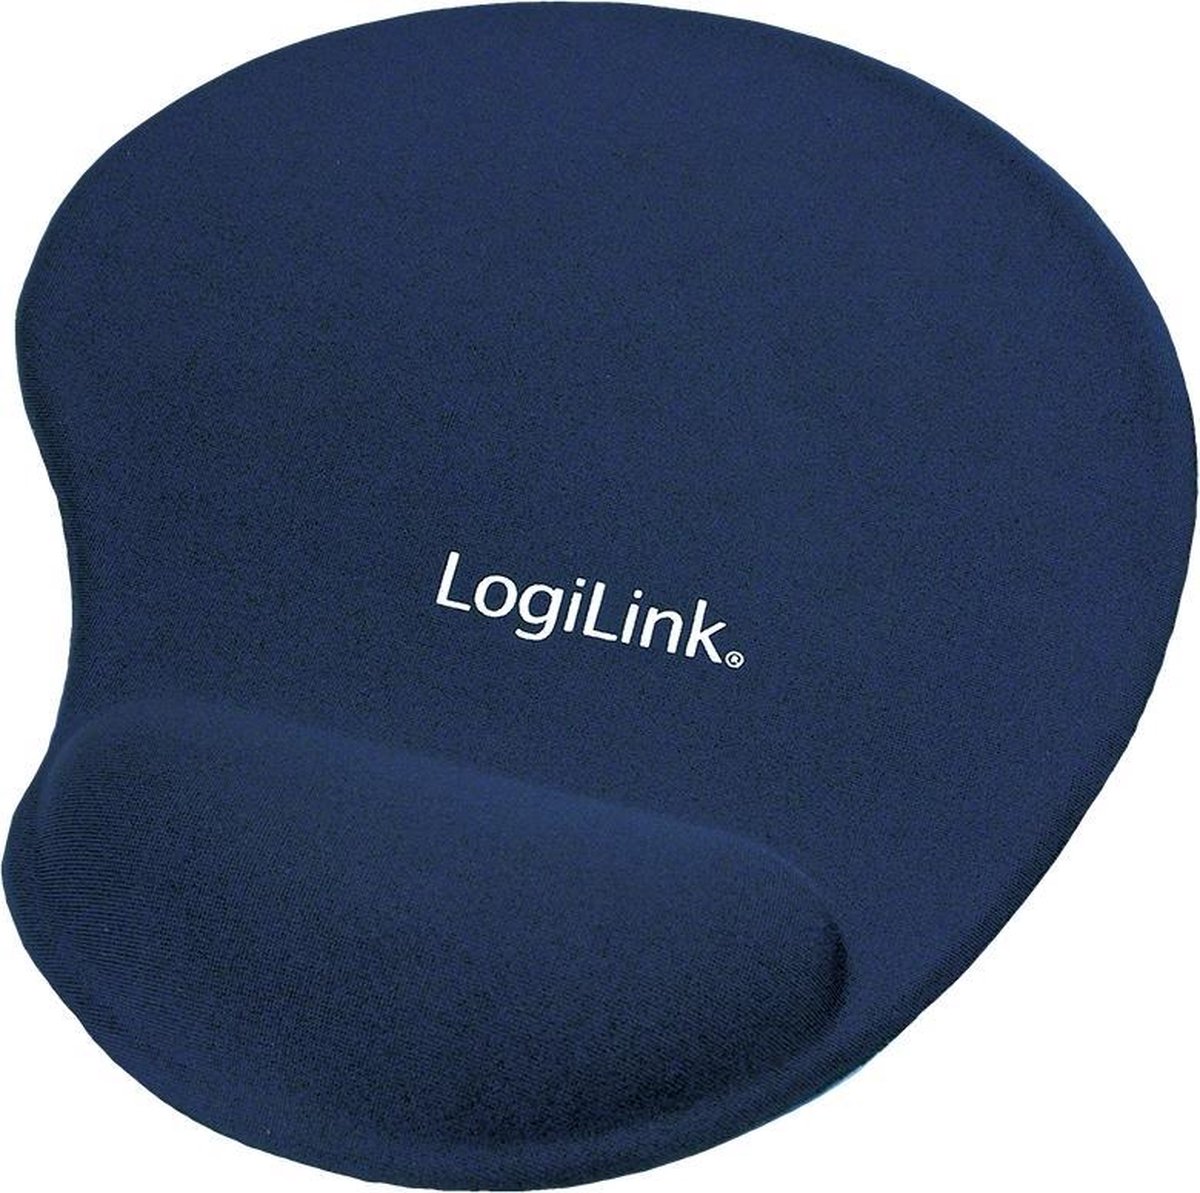 LogiLink ID0027B Muismat met polssteun Ergonomisch Blauw